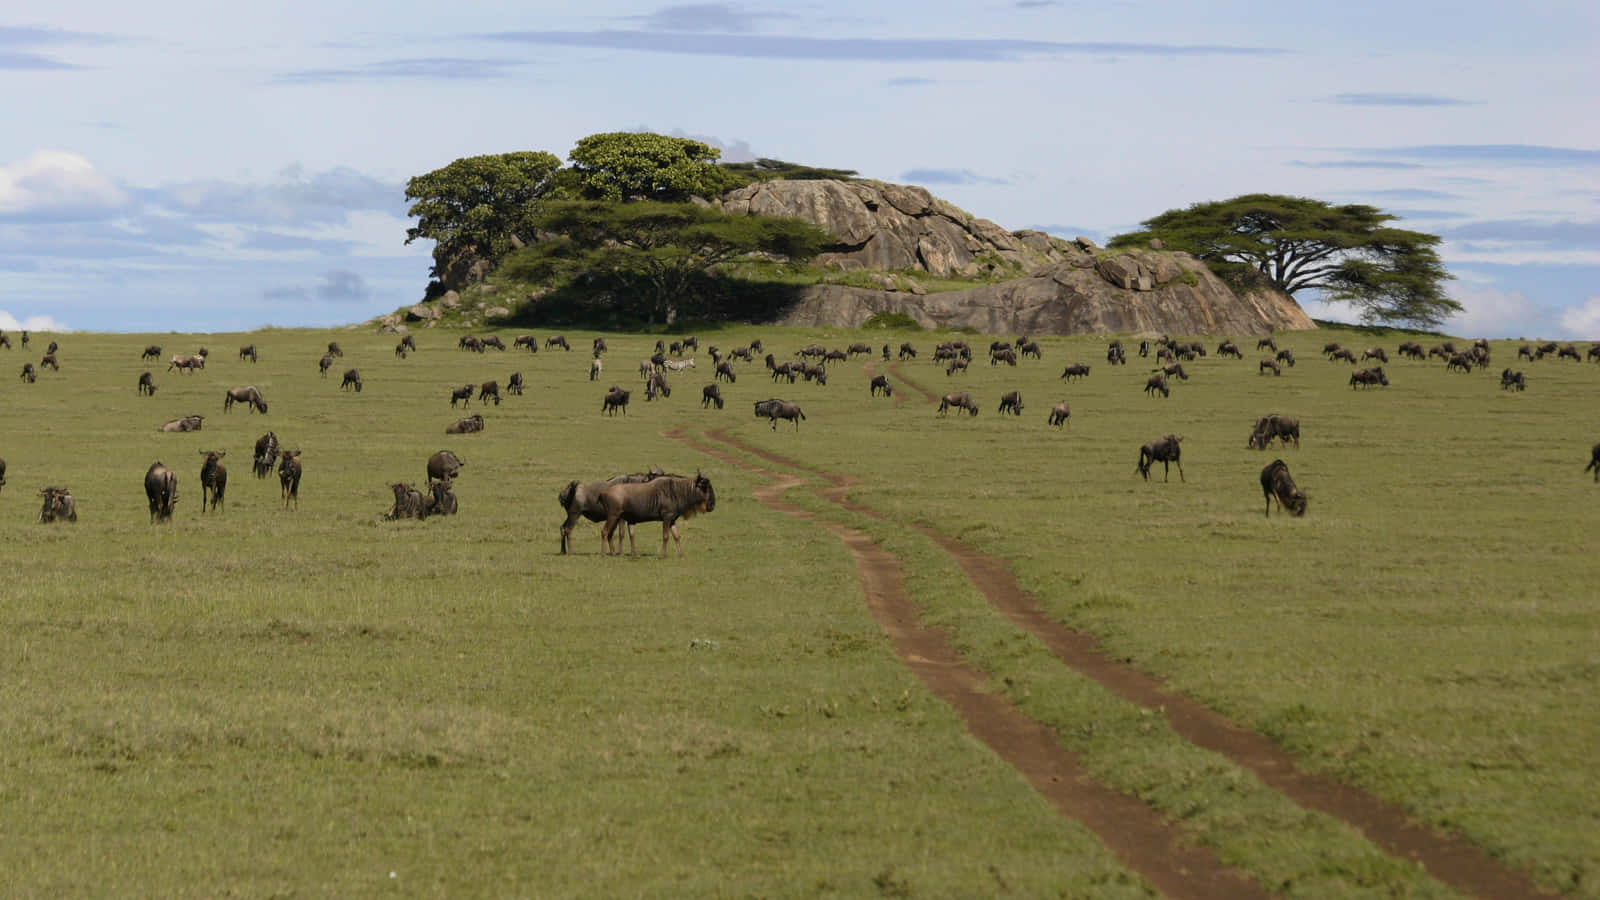 Serengeti National Park Wildebeests Eating Grass Wallpaper